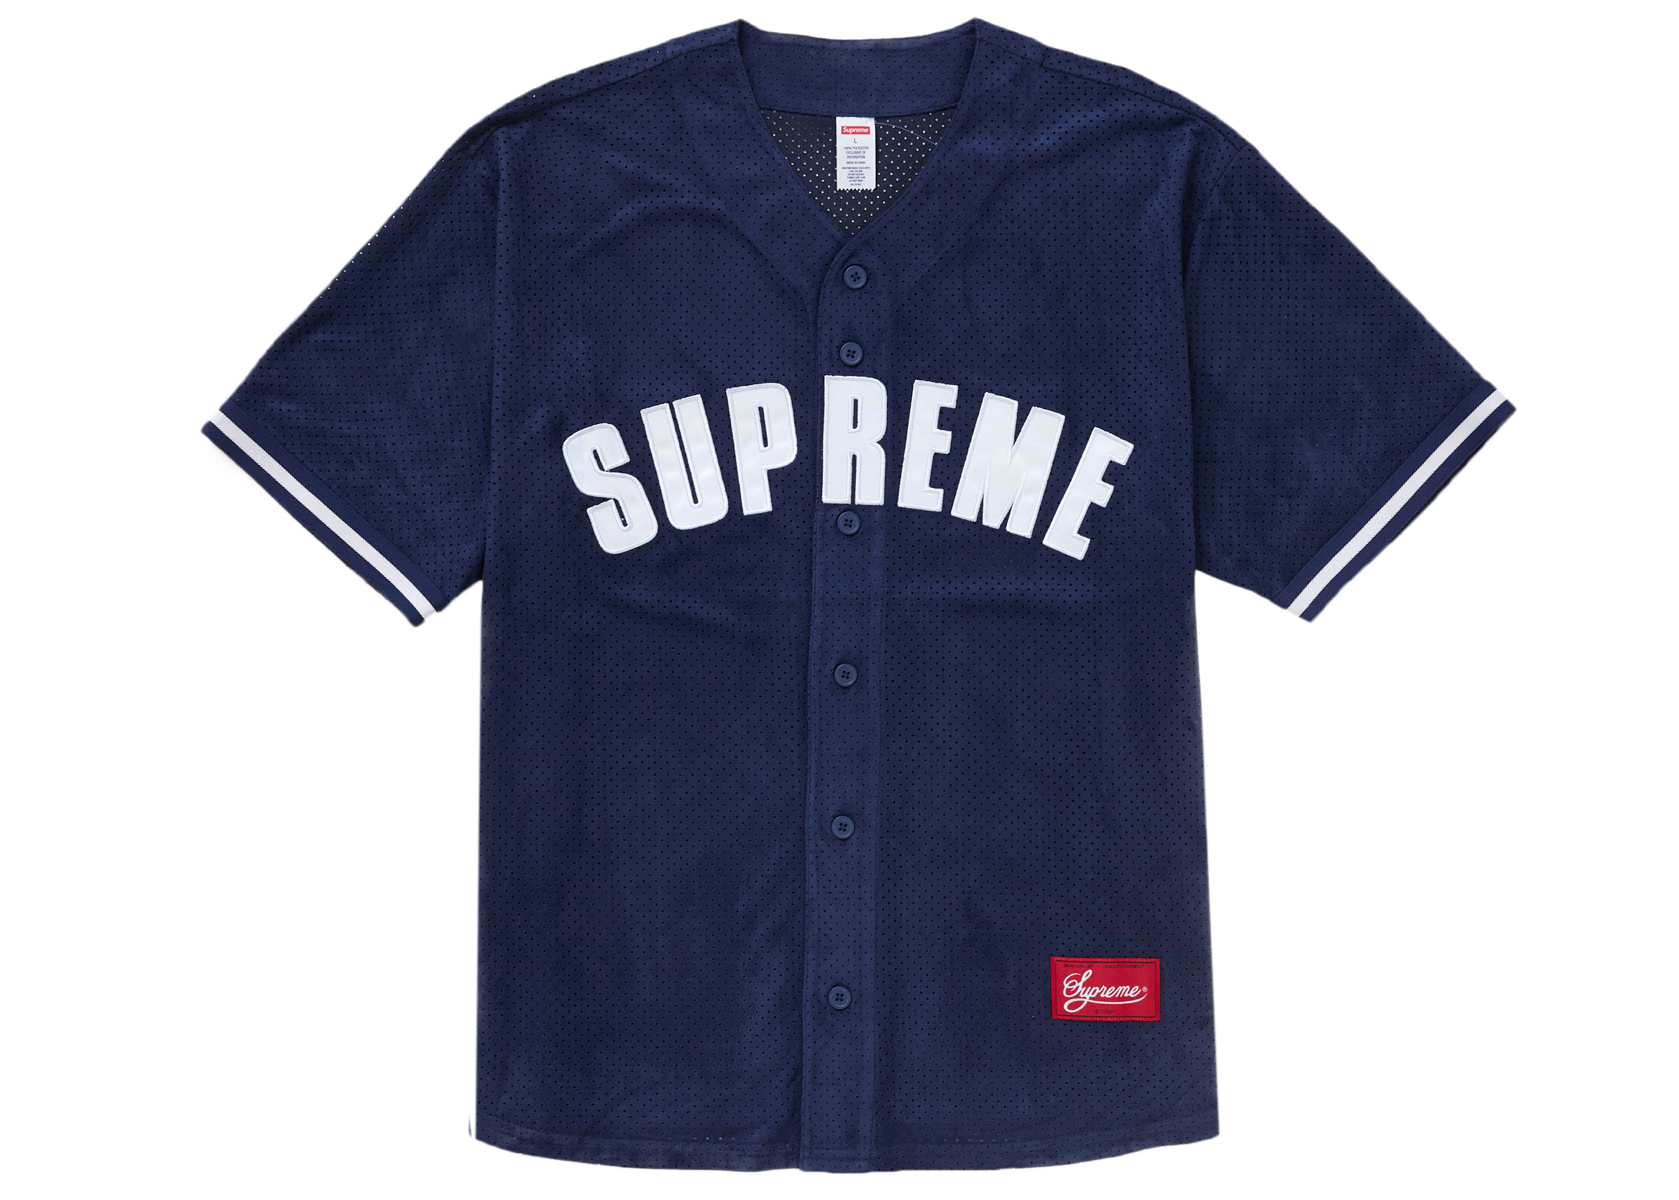 BaseballJeSupreme®/ Baseball Jersey